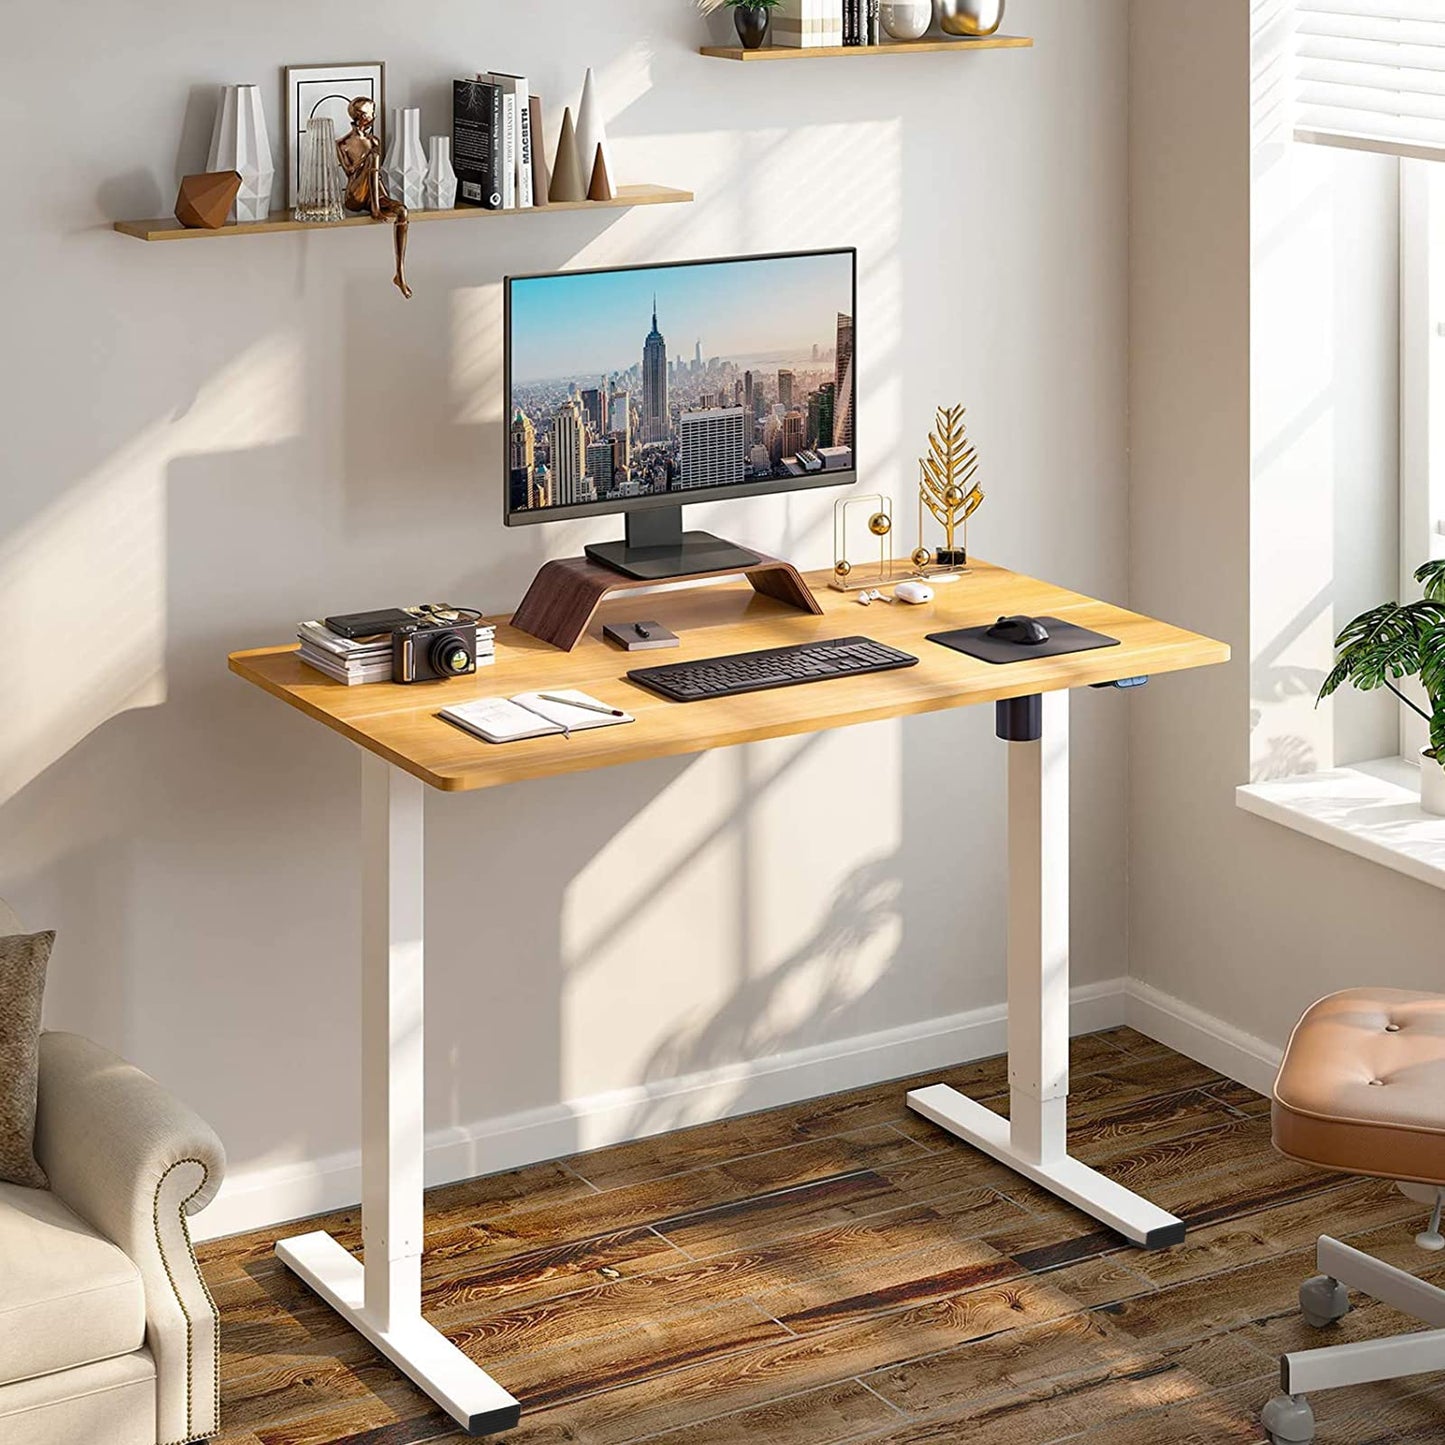 FLEXISPOT Standing Desk 48 x 24 Inches Whole-Piece Desktop Height Adjustable Desk Electric Sit Stand Up Desk Home Office Desks Computer